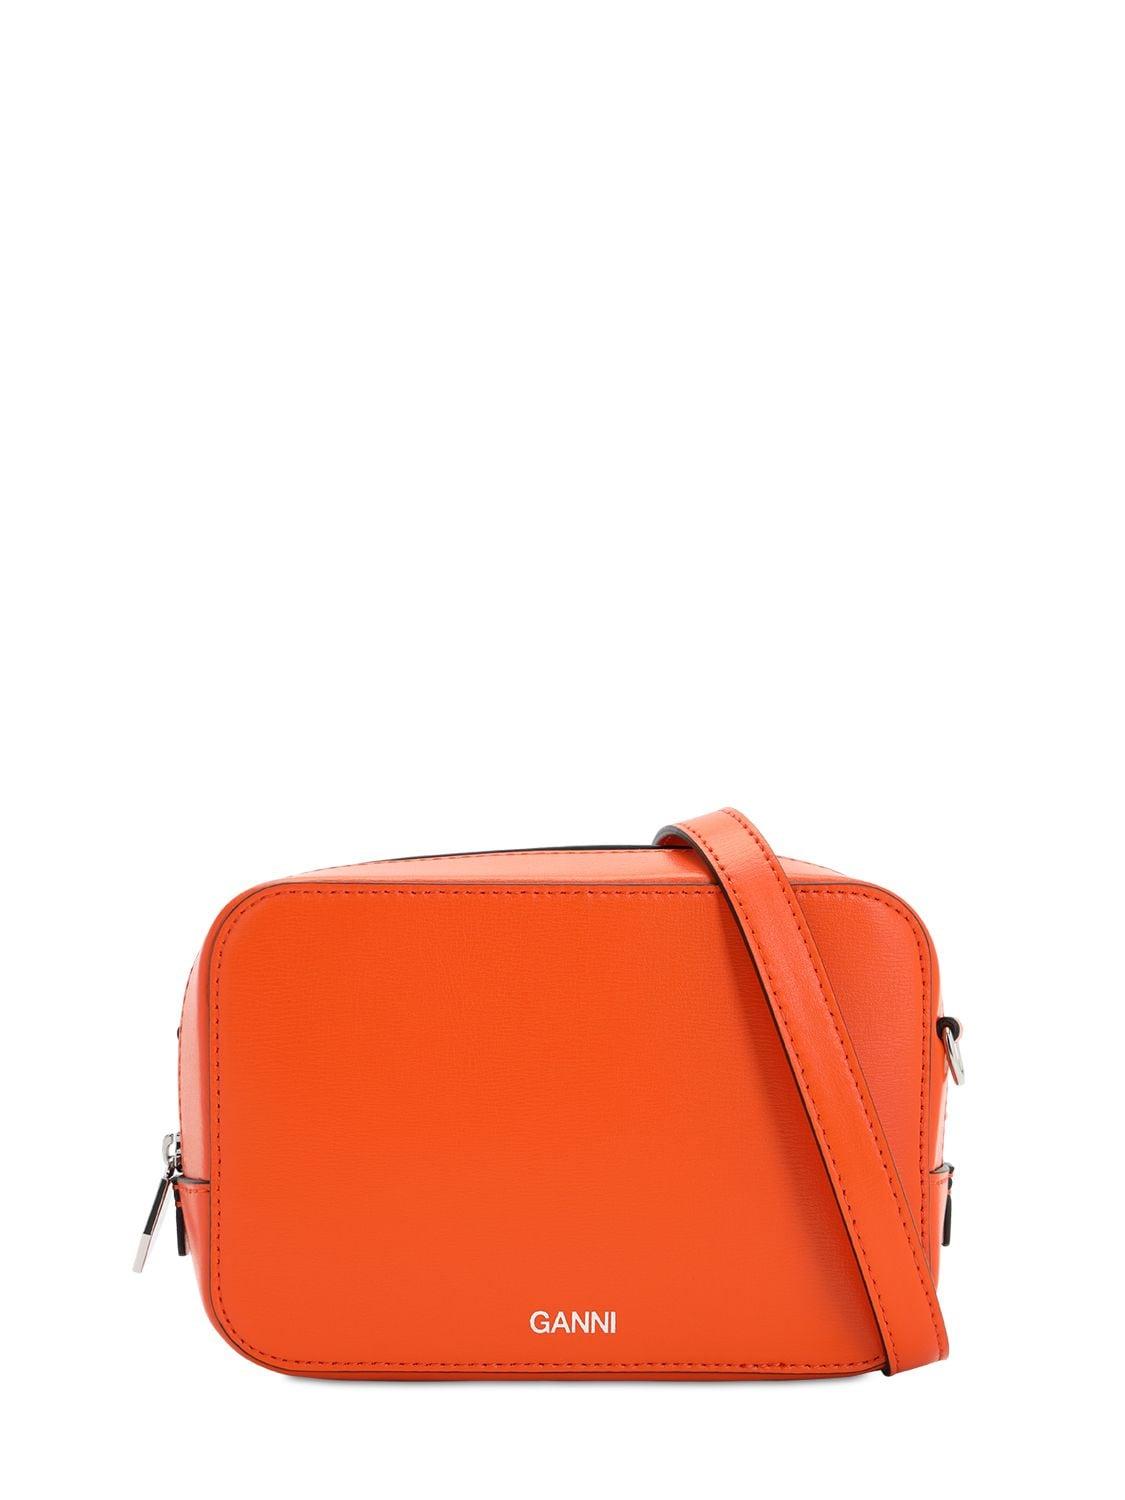 Ganni Textured Leather Bag in Orange - Lyst